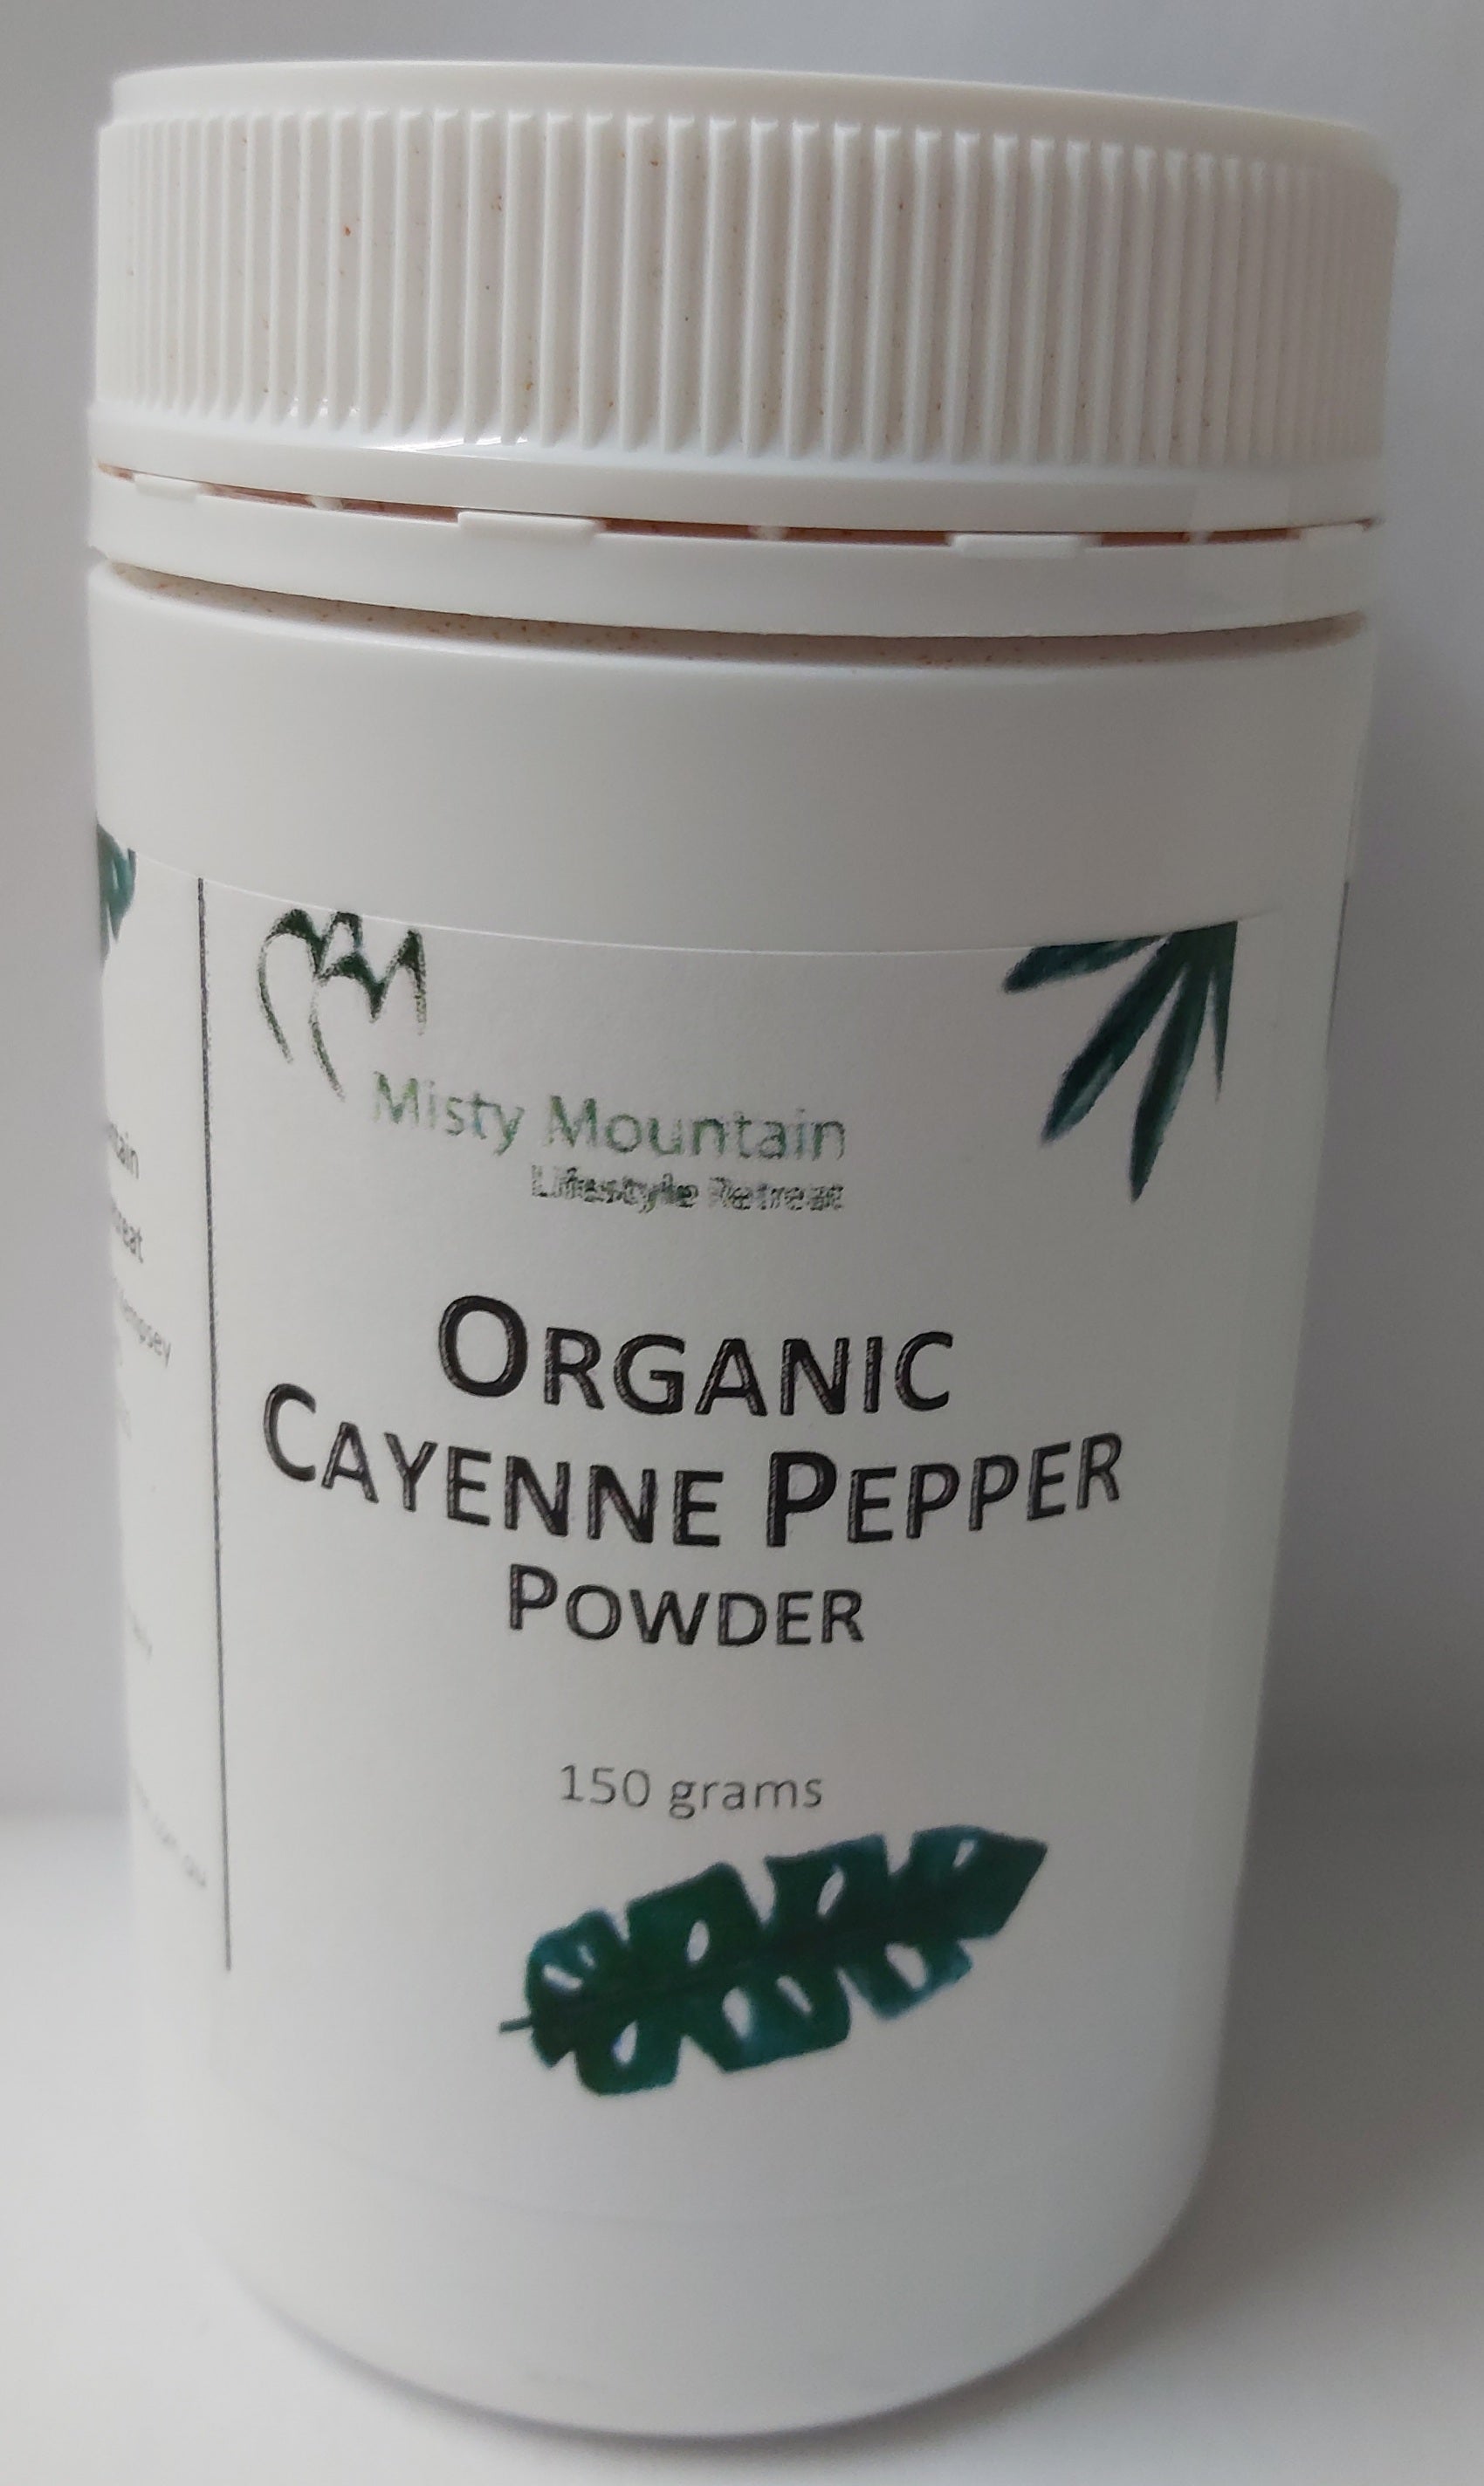 Misty Mountain Organic Cayenne Pepper Powder 150g